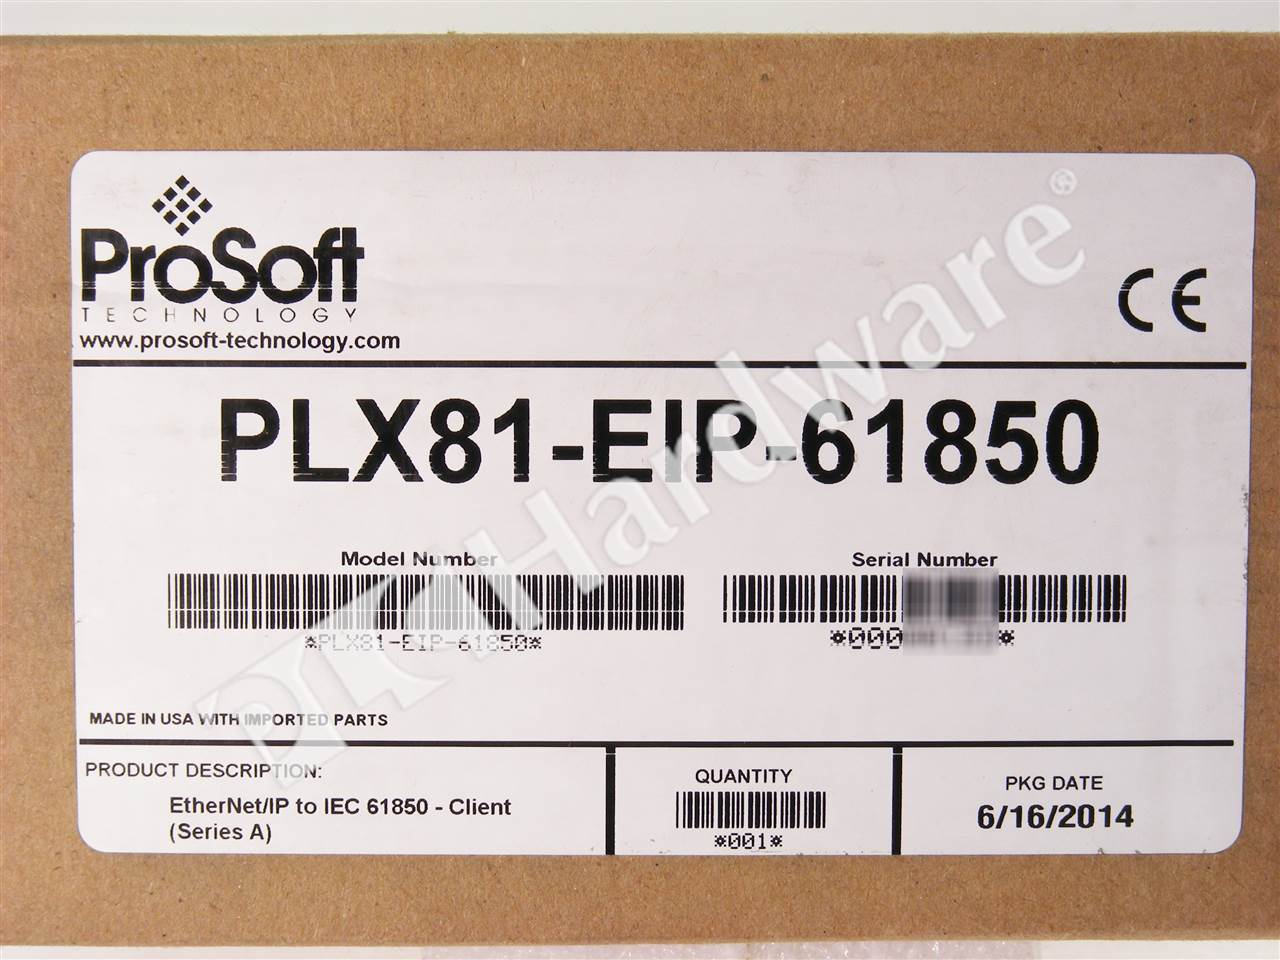 PLC Hardware - Allen Bradley PLX81-EIP-61850, Surplus Sealed Pre-owned